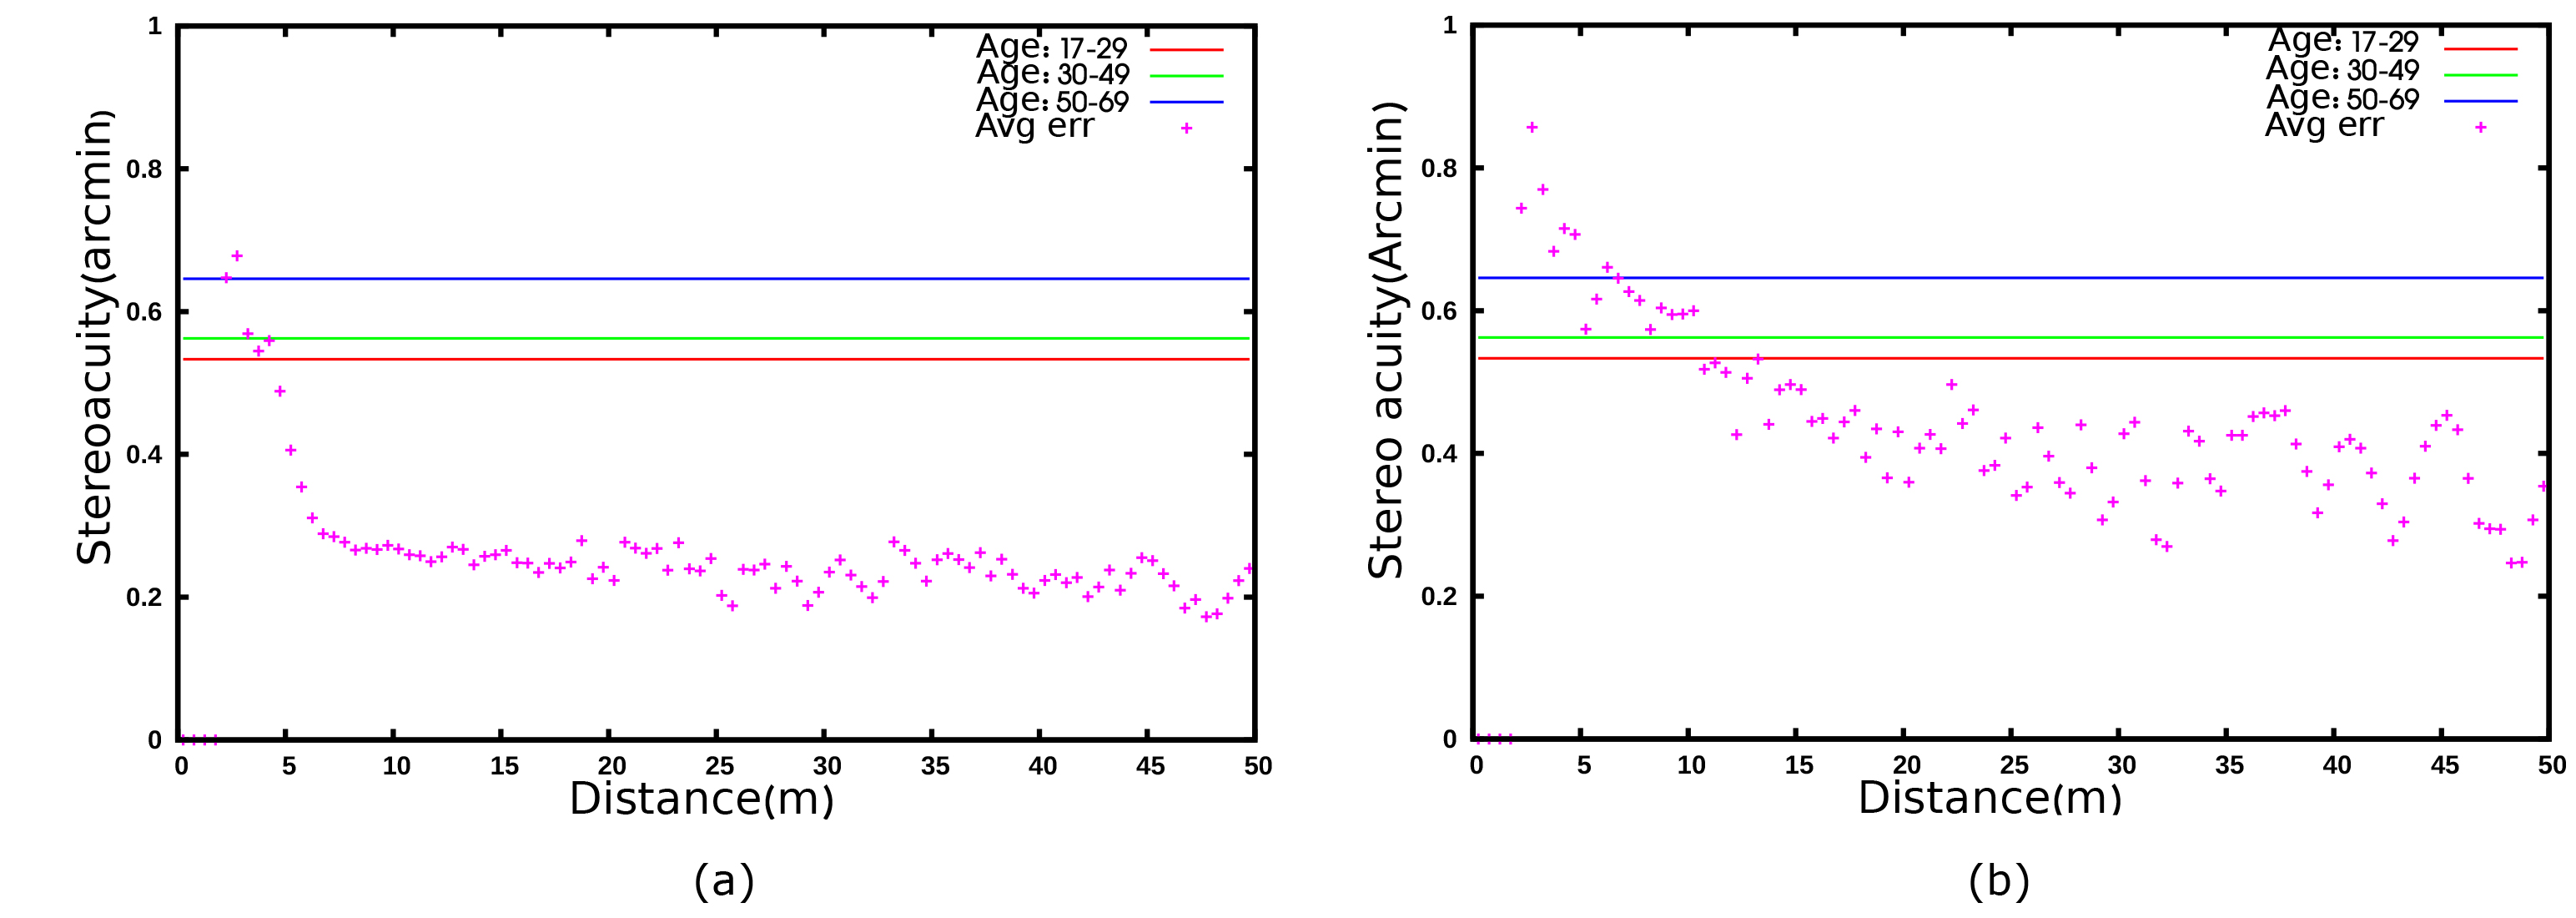 Average relative depth error over distance for the whole image. (a) Average relative depth error by SGBM. (b) Average relative depth error by ADCensusB